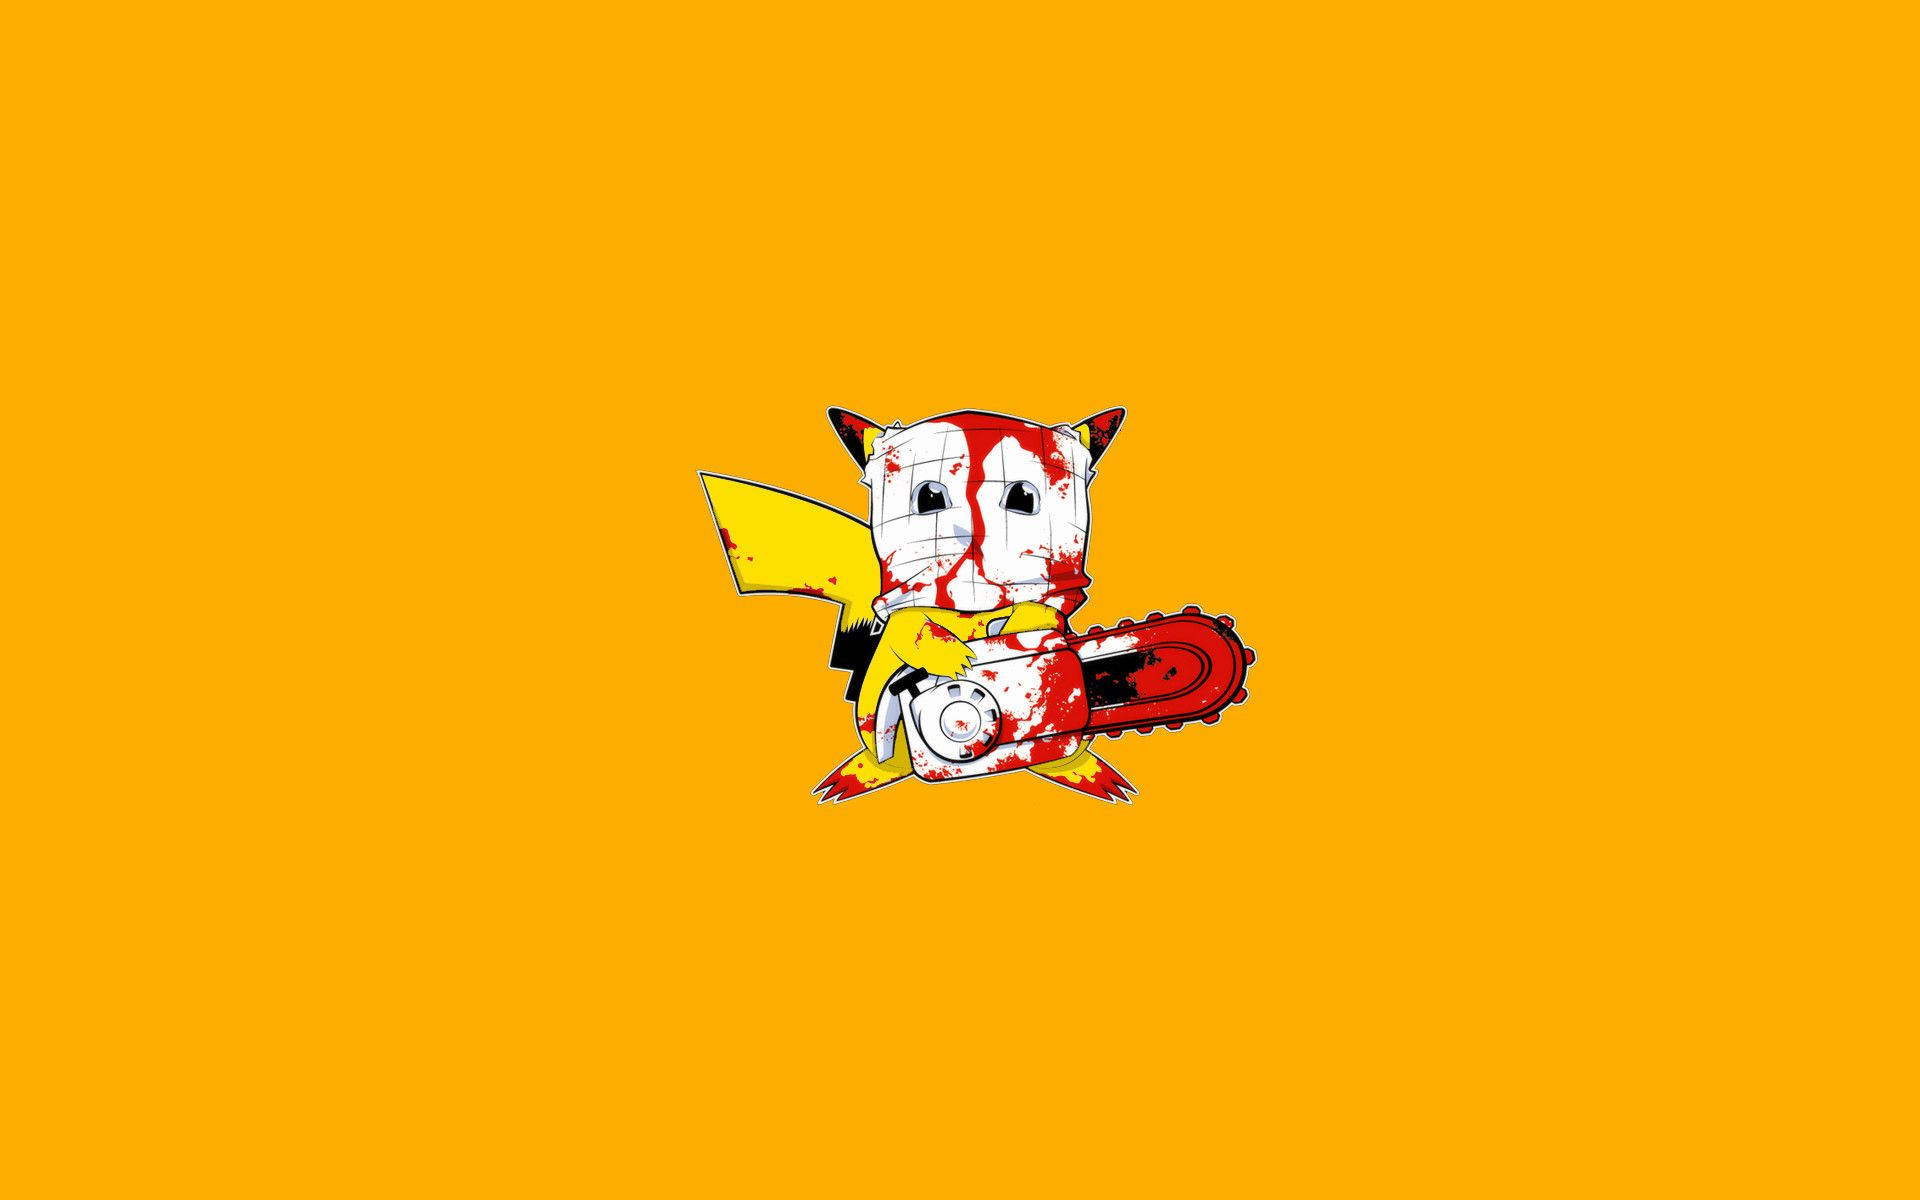 Pikachu 3d Anime Style Illustration Background